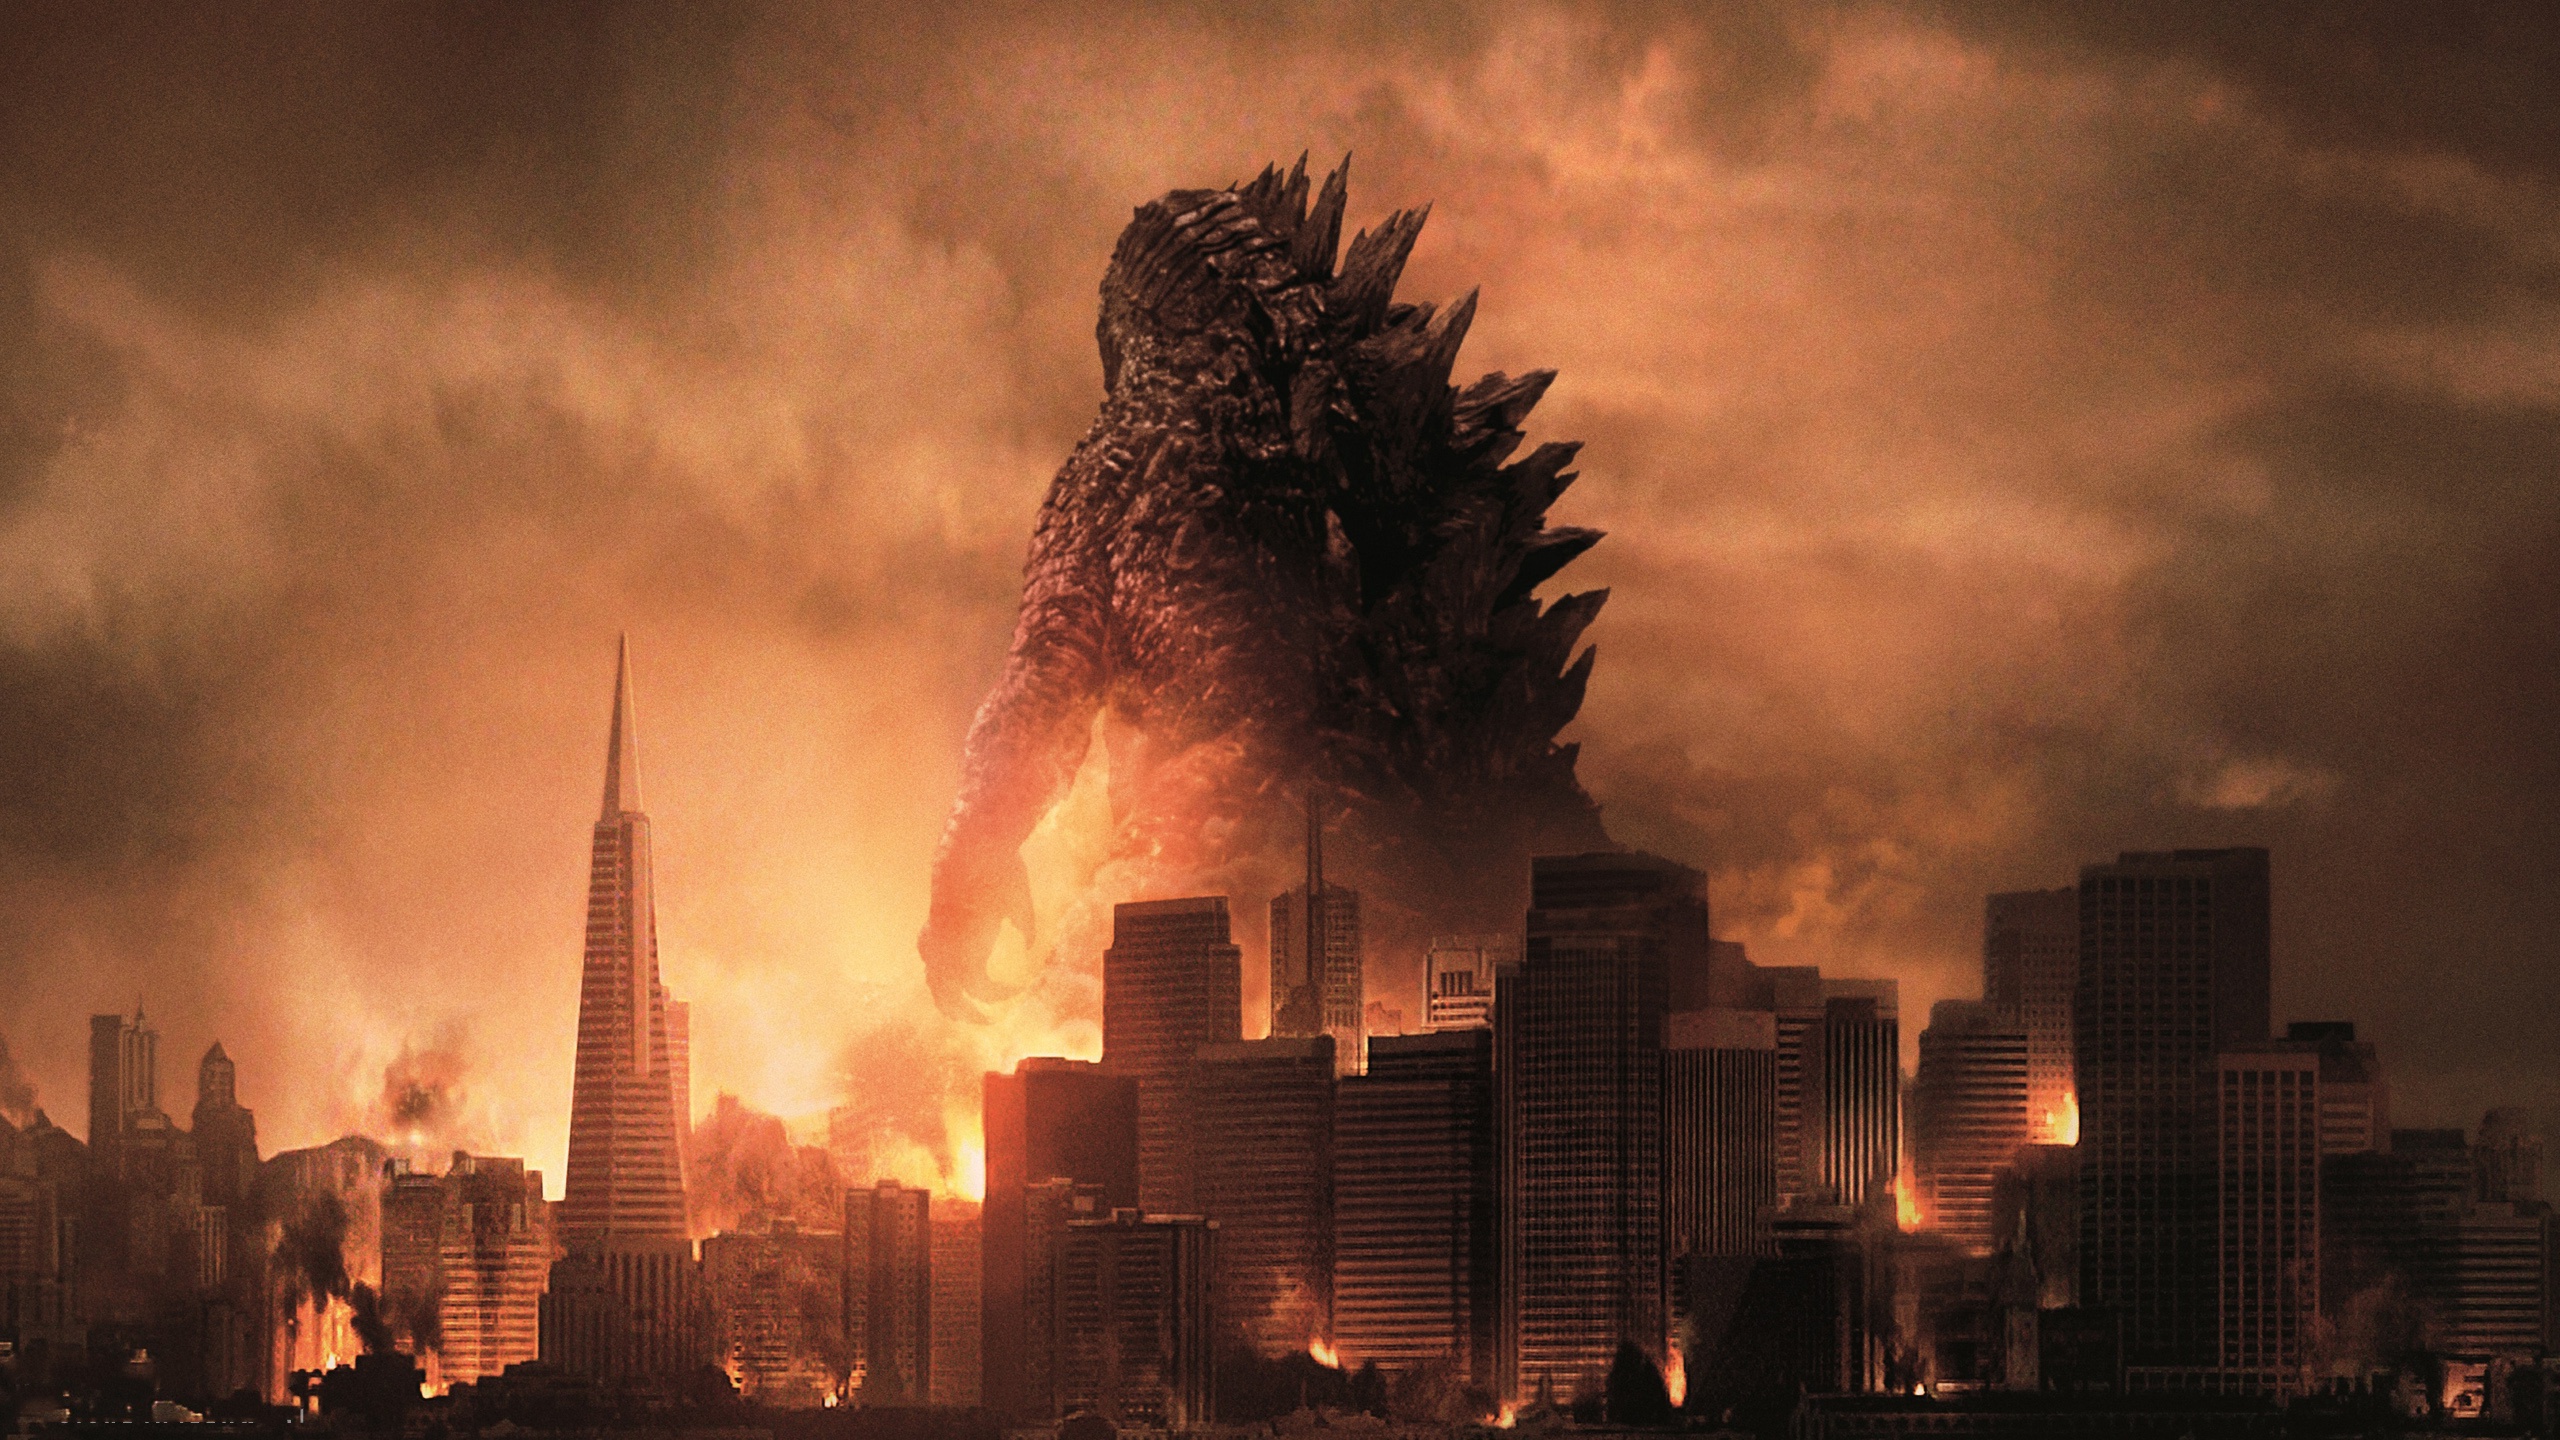 What Do Godzilla 2014 And The Original Gojira Have In Common?